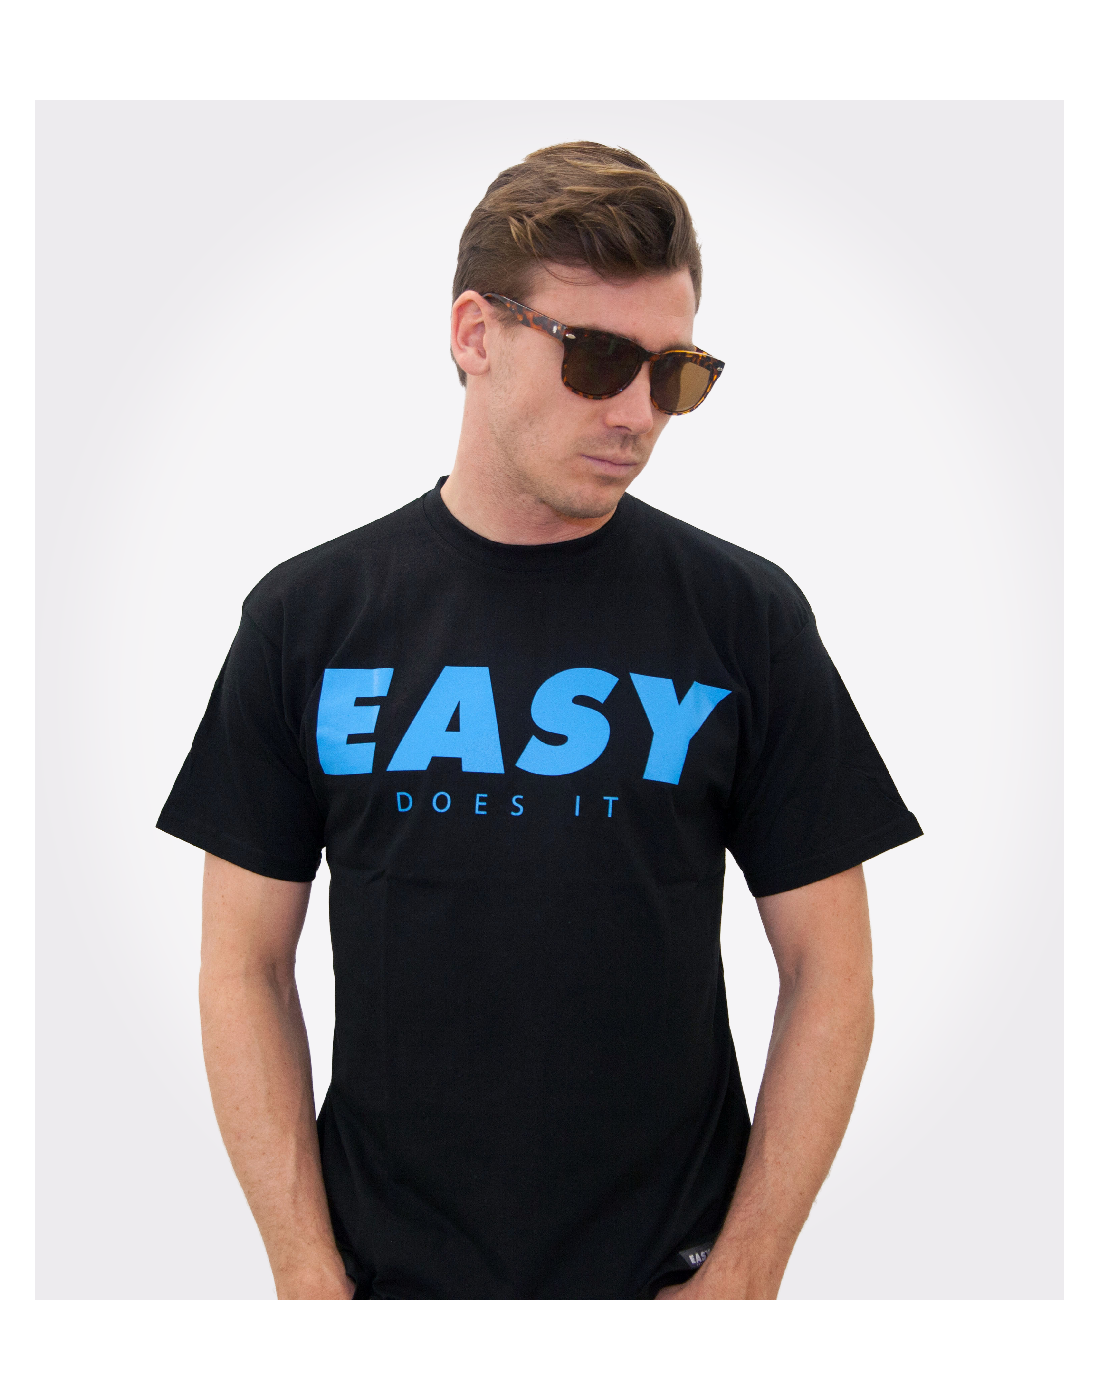 EASY Shirt Black Blue